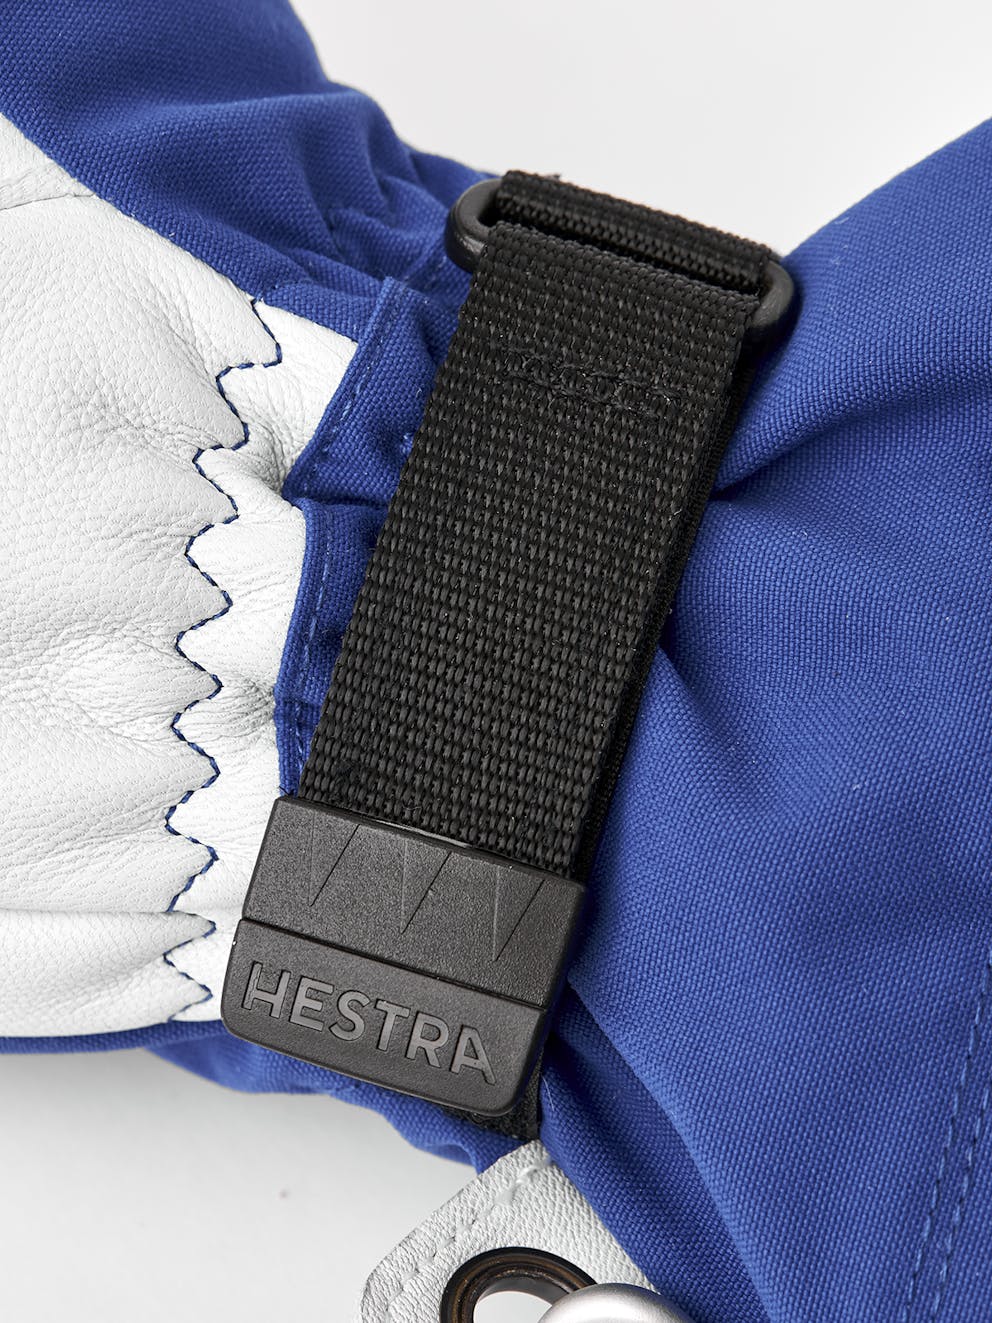 Hestra Army Gloves - Royal blue Heli Leather | Ski